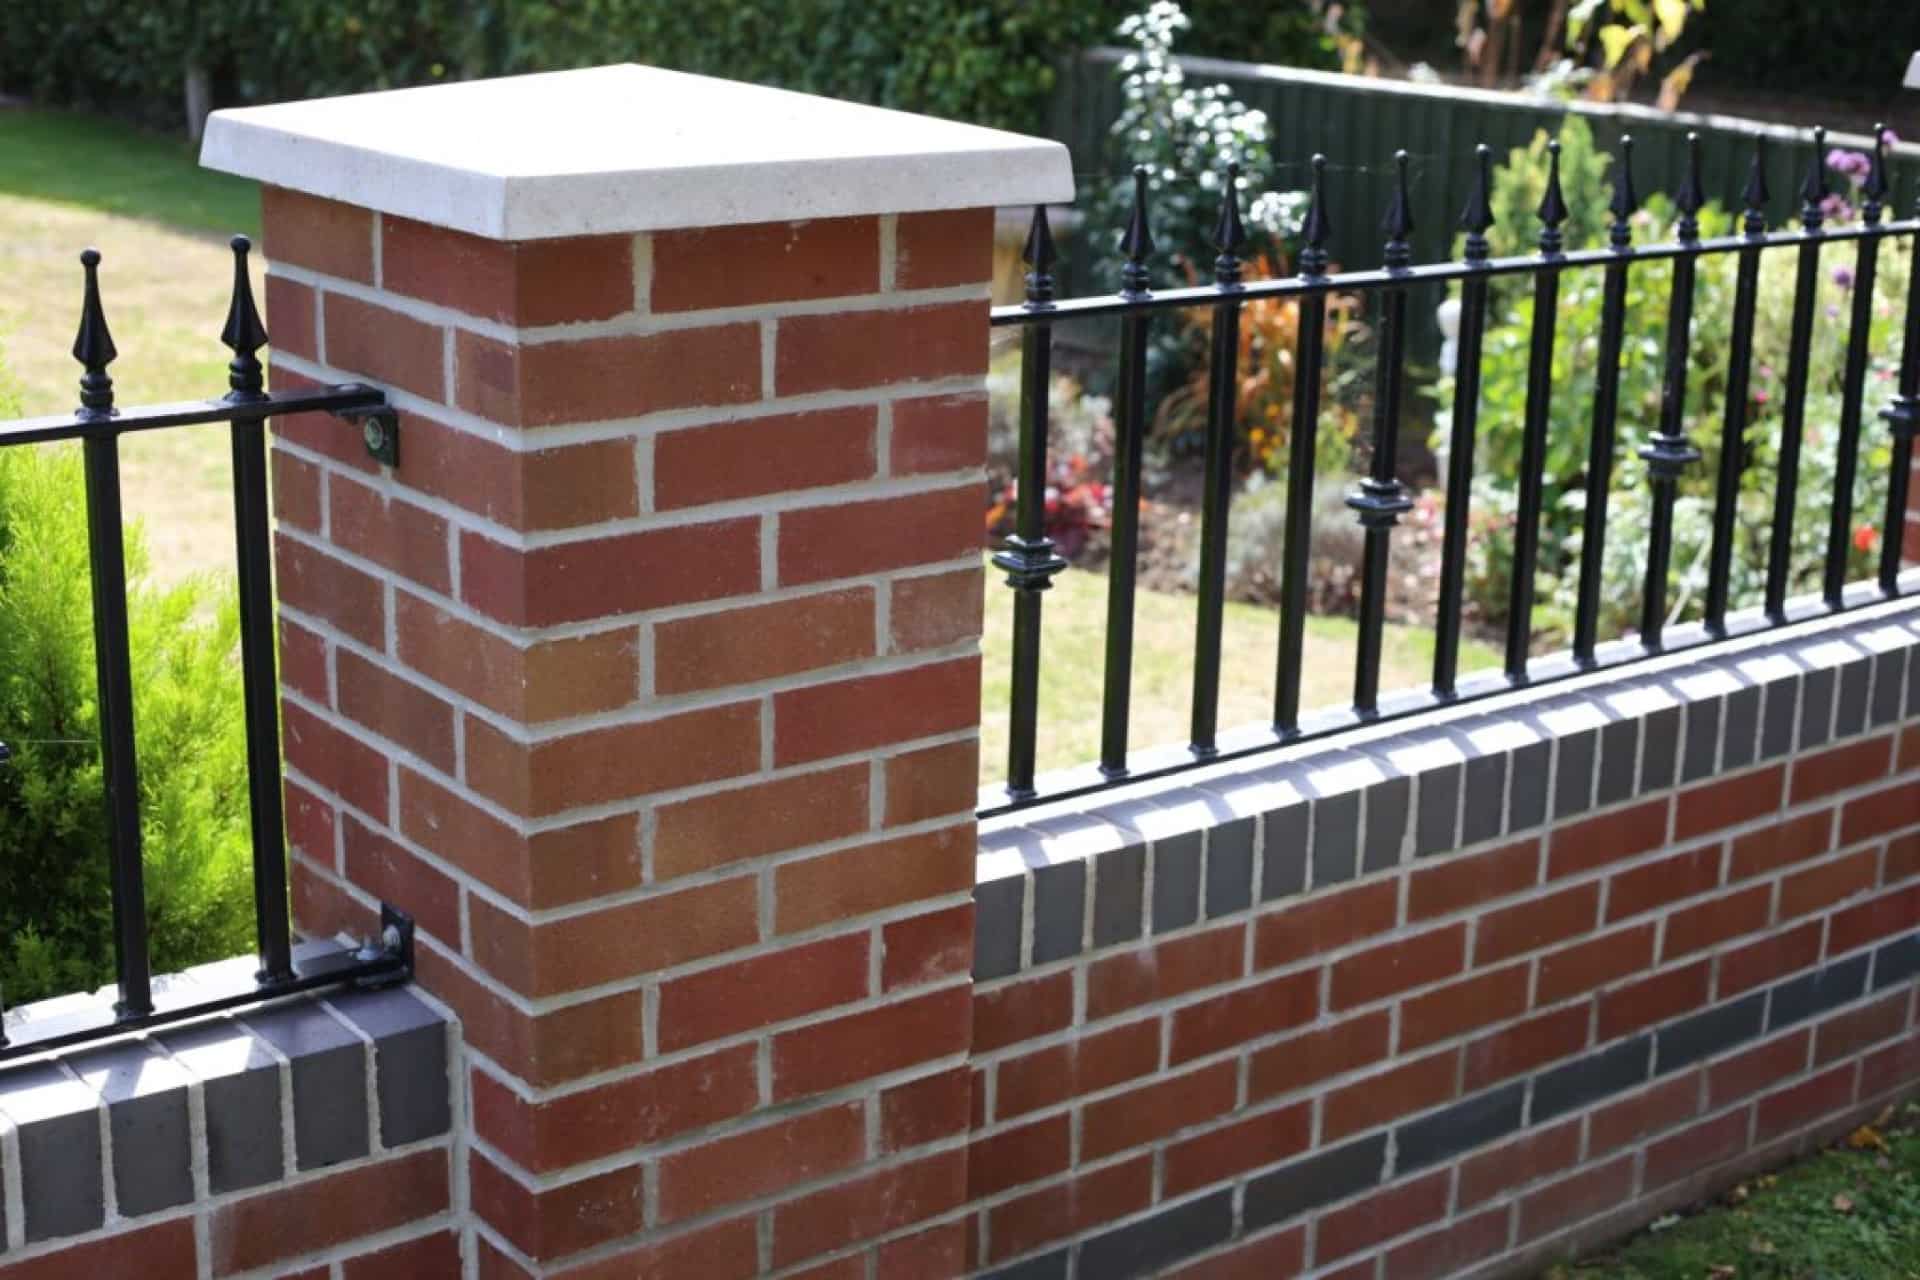 Quality Bridgwater Brickwork & Walls company